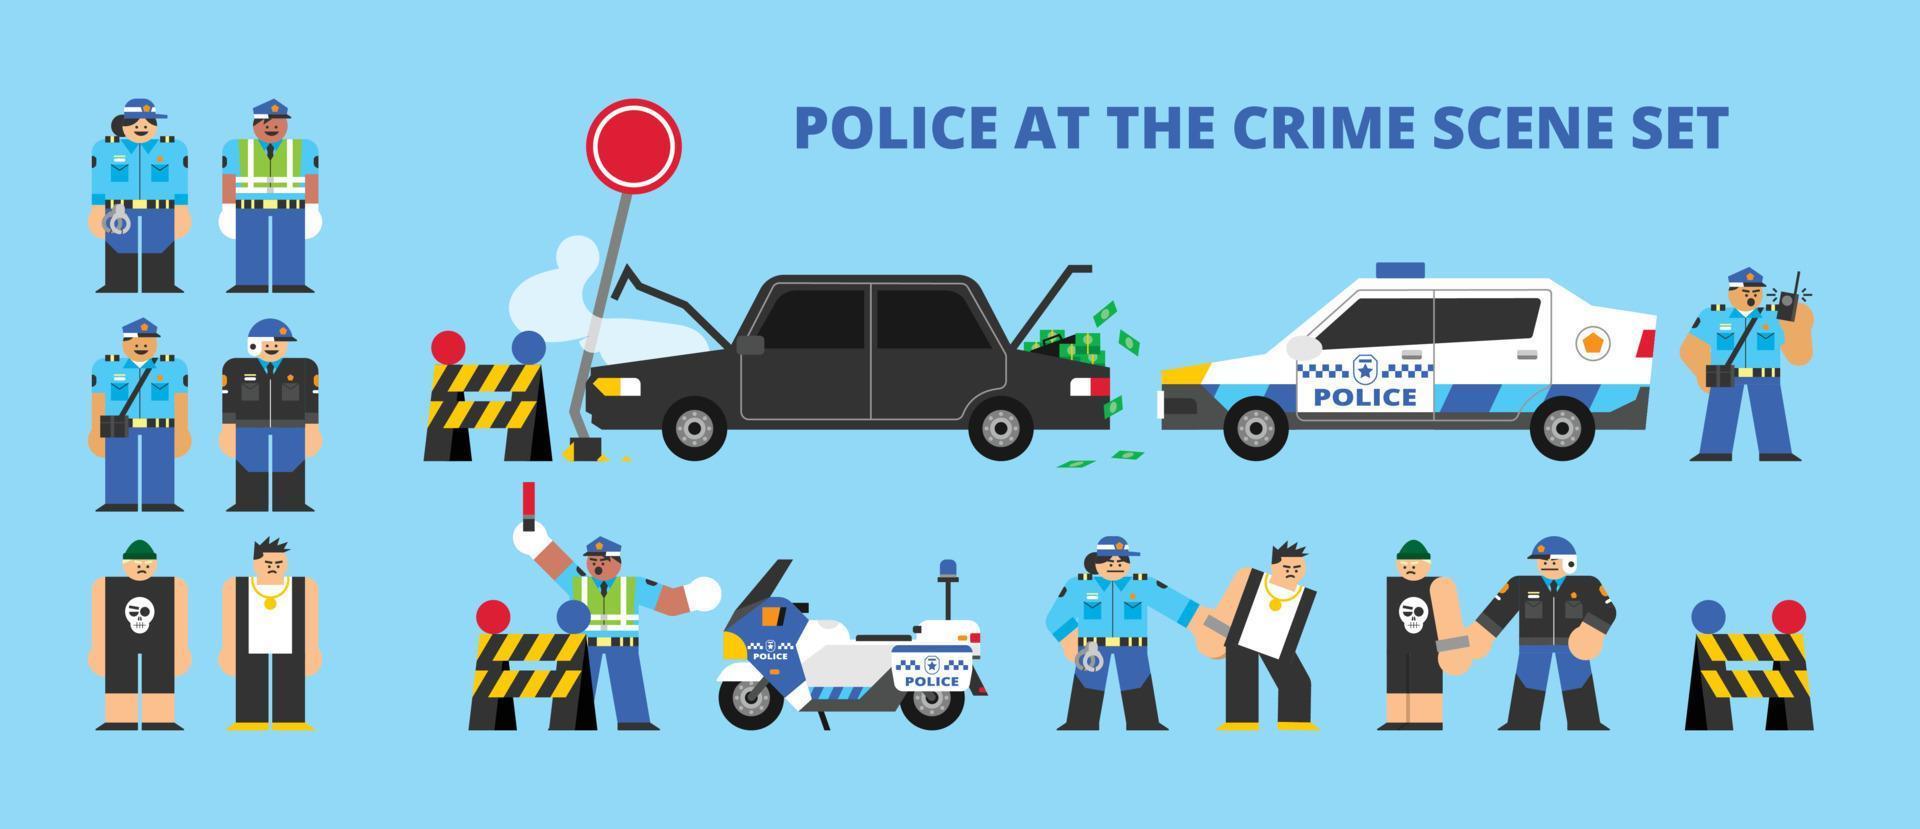 Police at the Crime Scene Set Flat Design Character Illustration vector